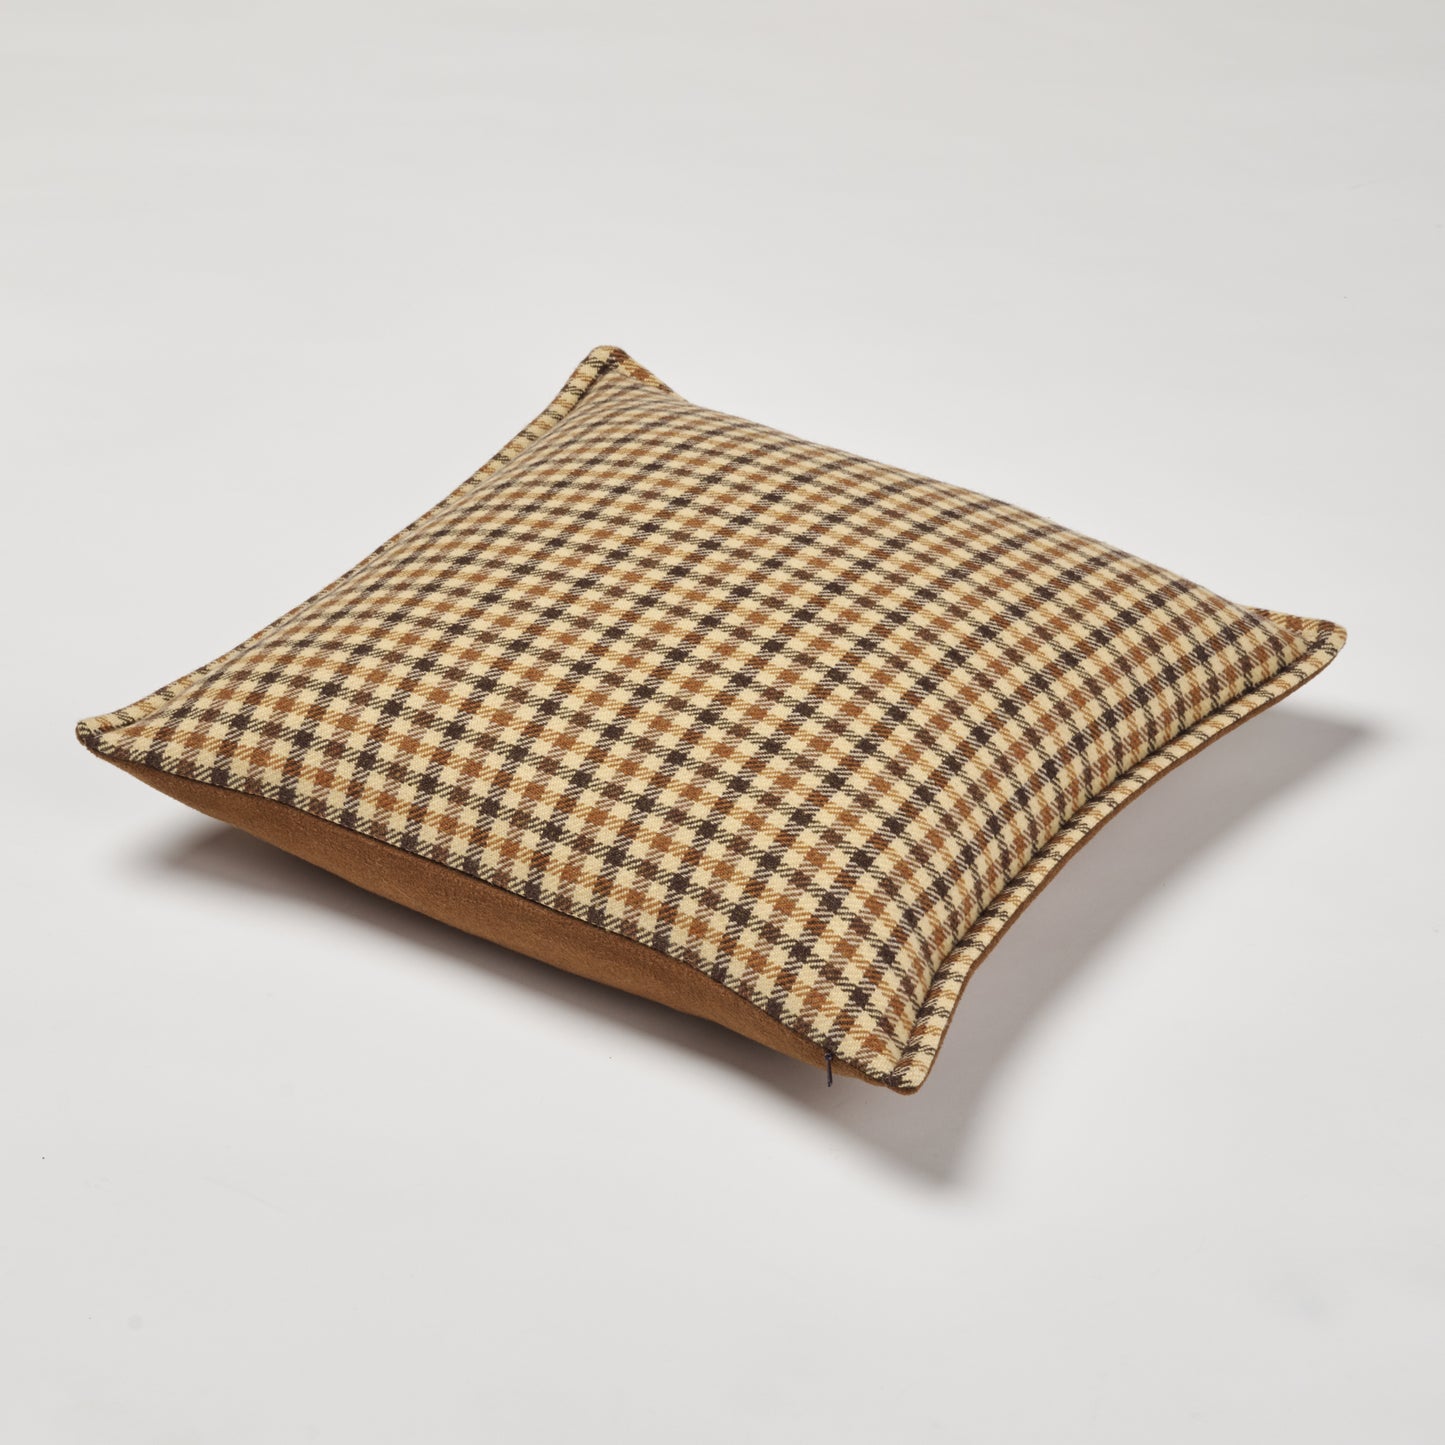 Rustic Pillow 20"x20"